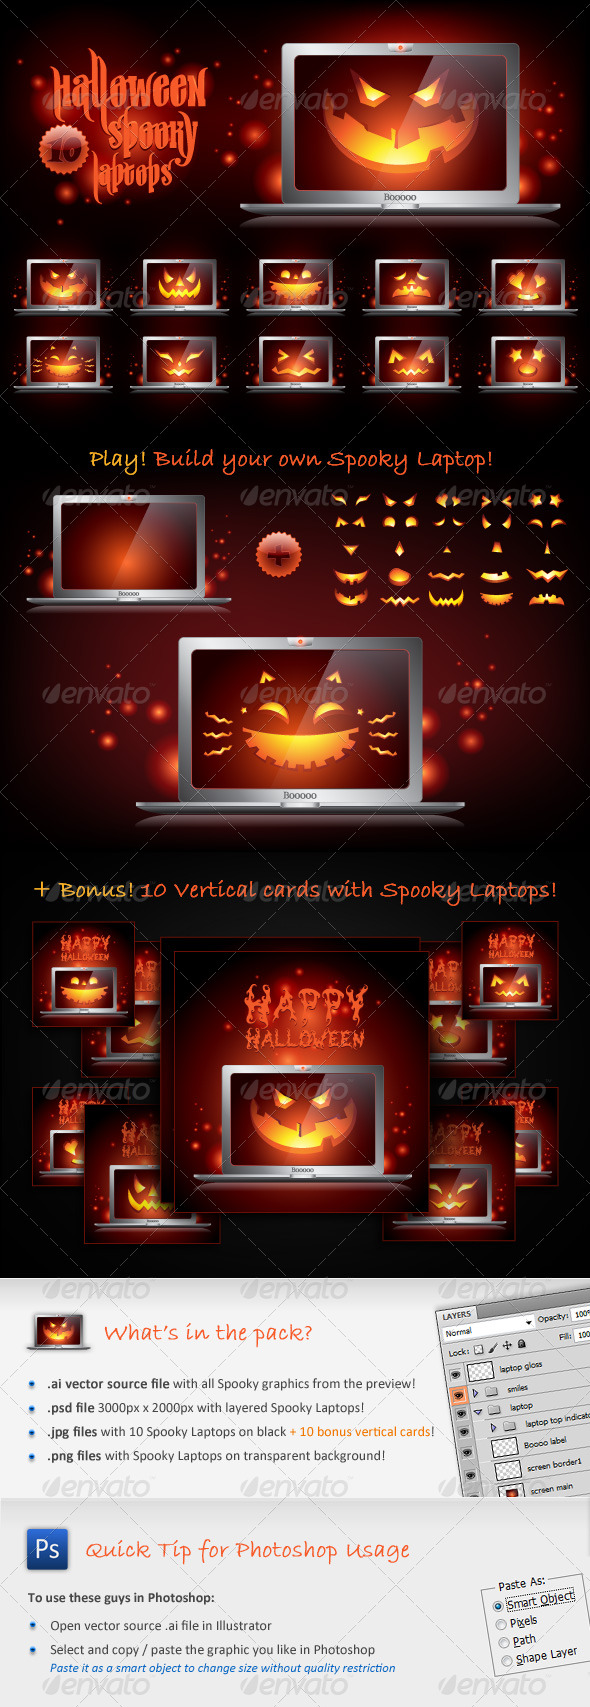 Halloween Spooky Laptops